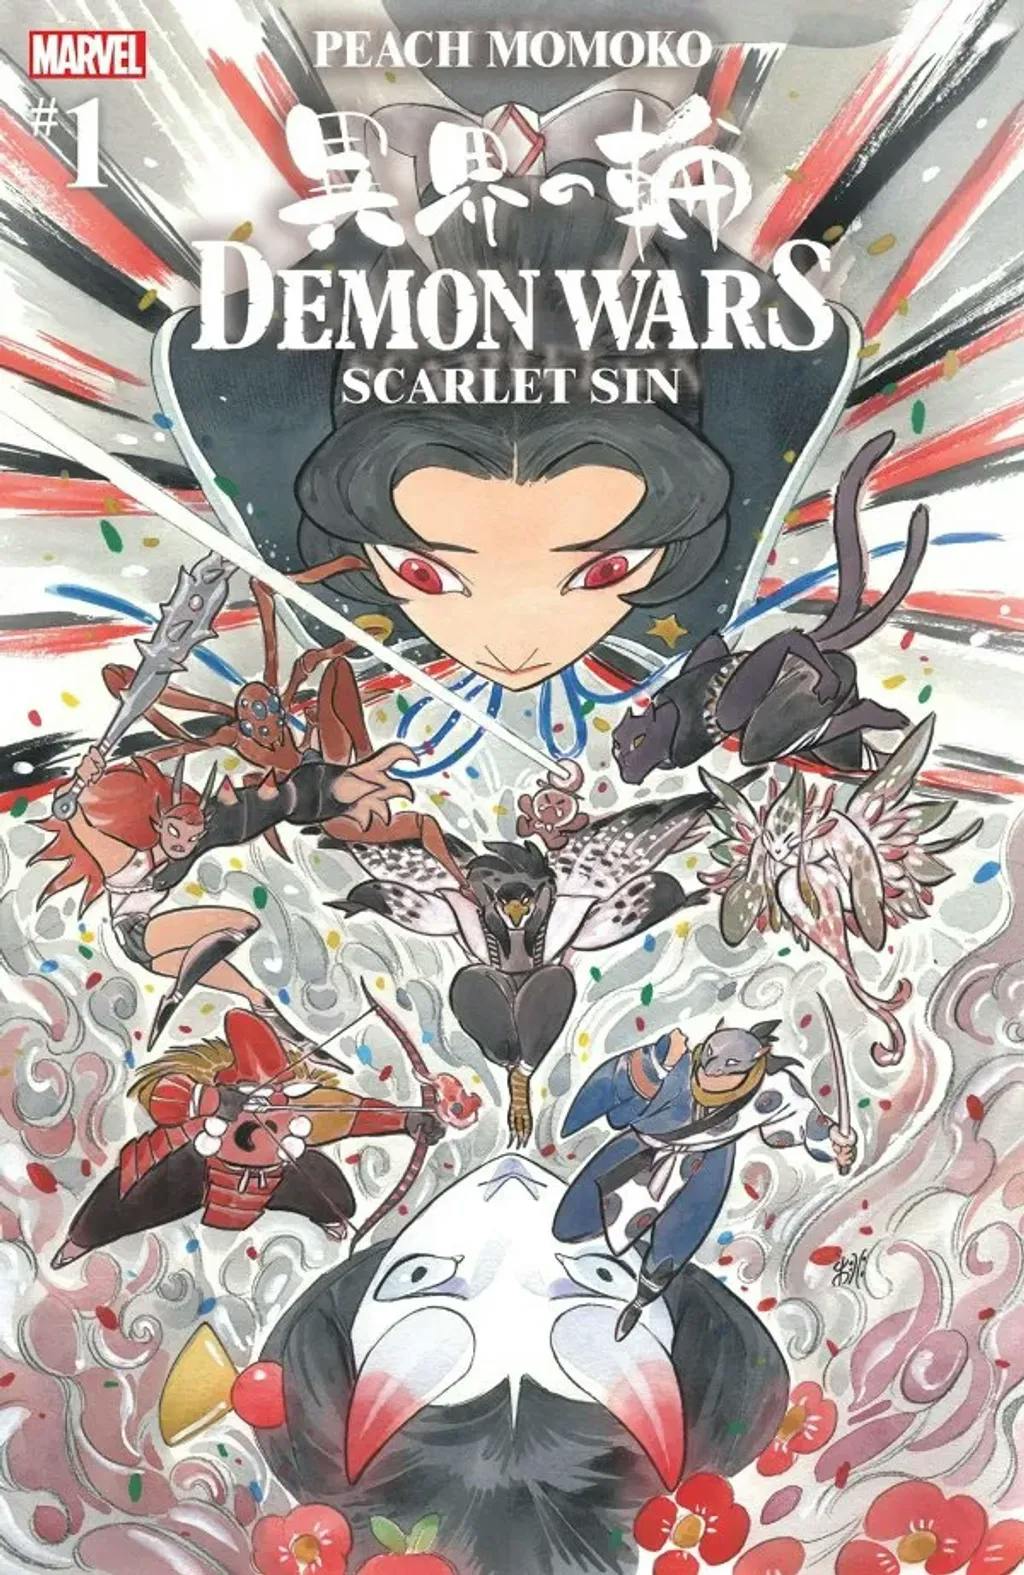 Demon Wars: Scarlet Sin #1 By Peach Momoko